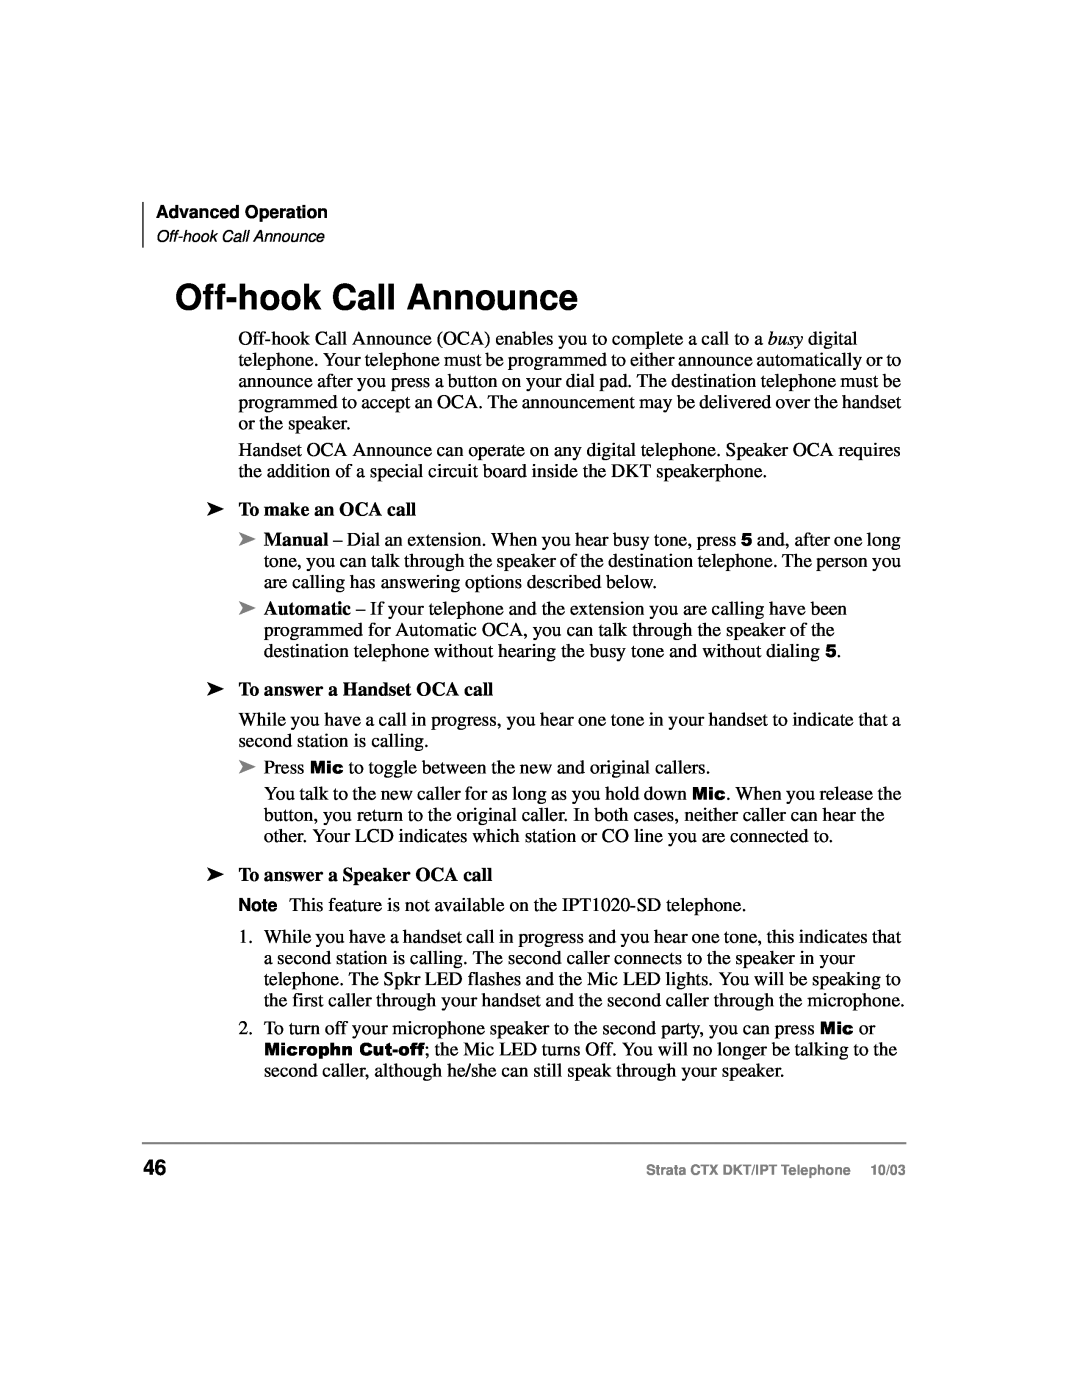 Toshiba IPT, DKT Off-hook Call Announce, To make an OCA call, To answer a Handset OCA call, To answer a Speaker OCA call 